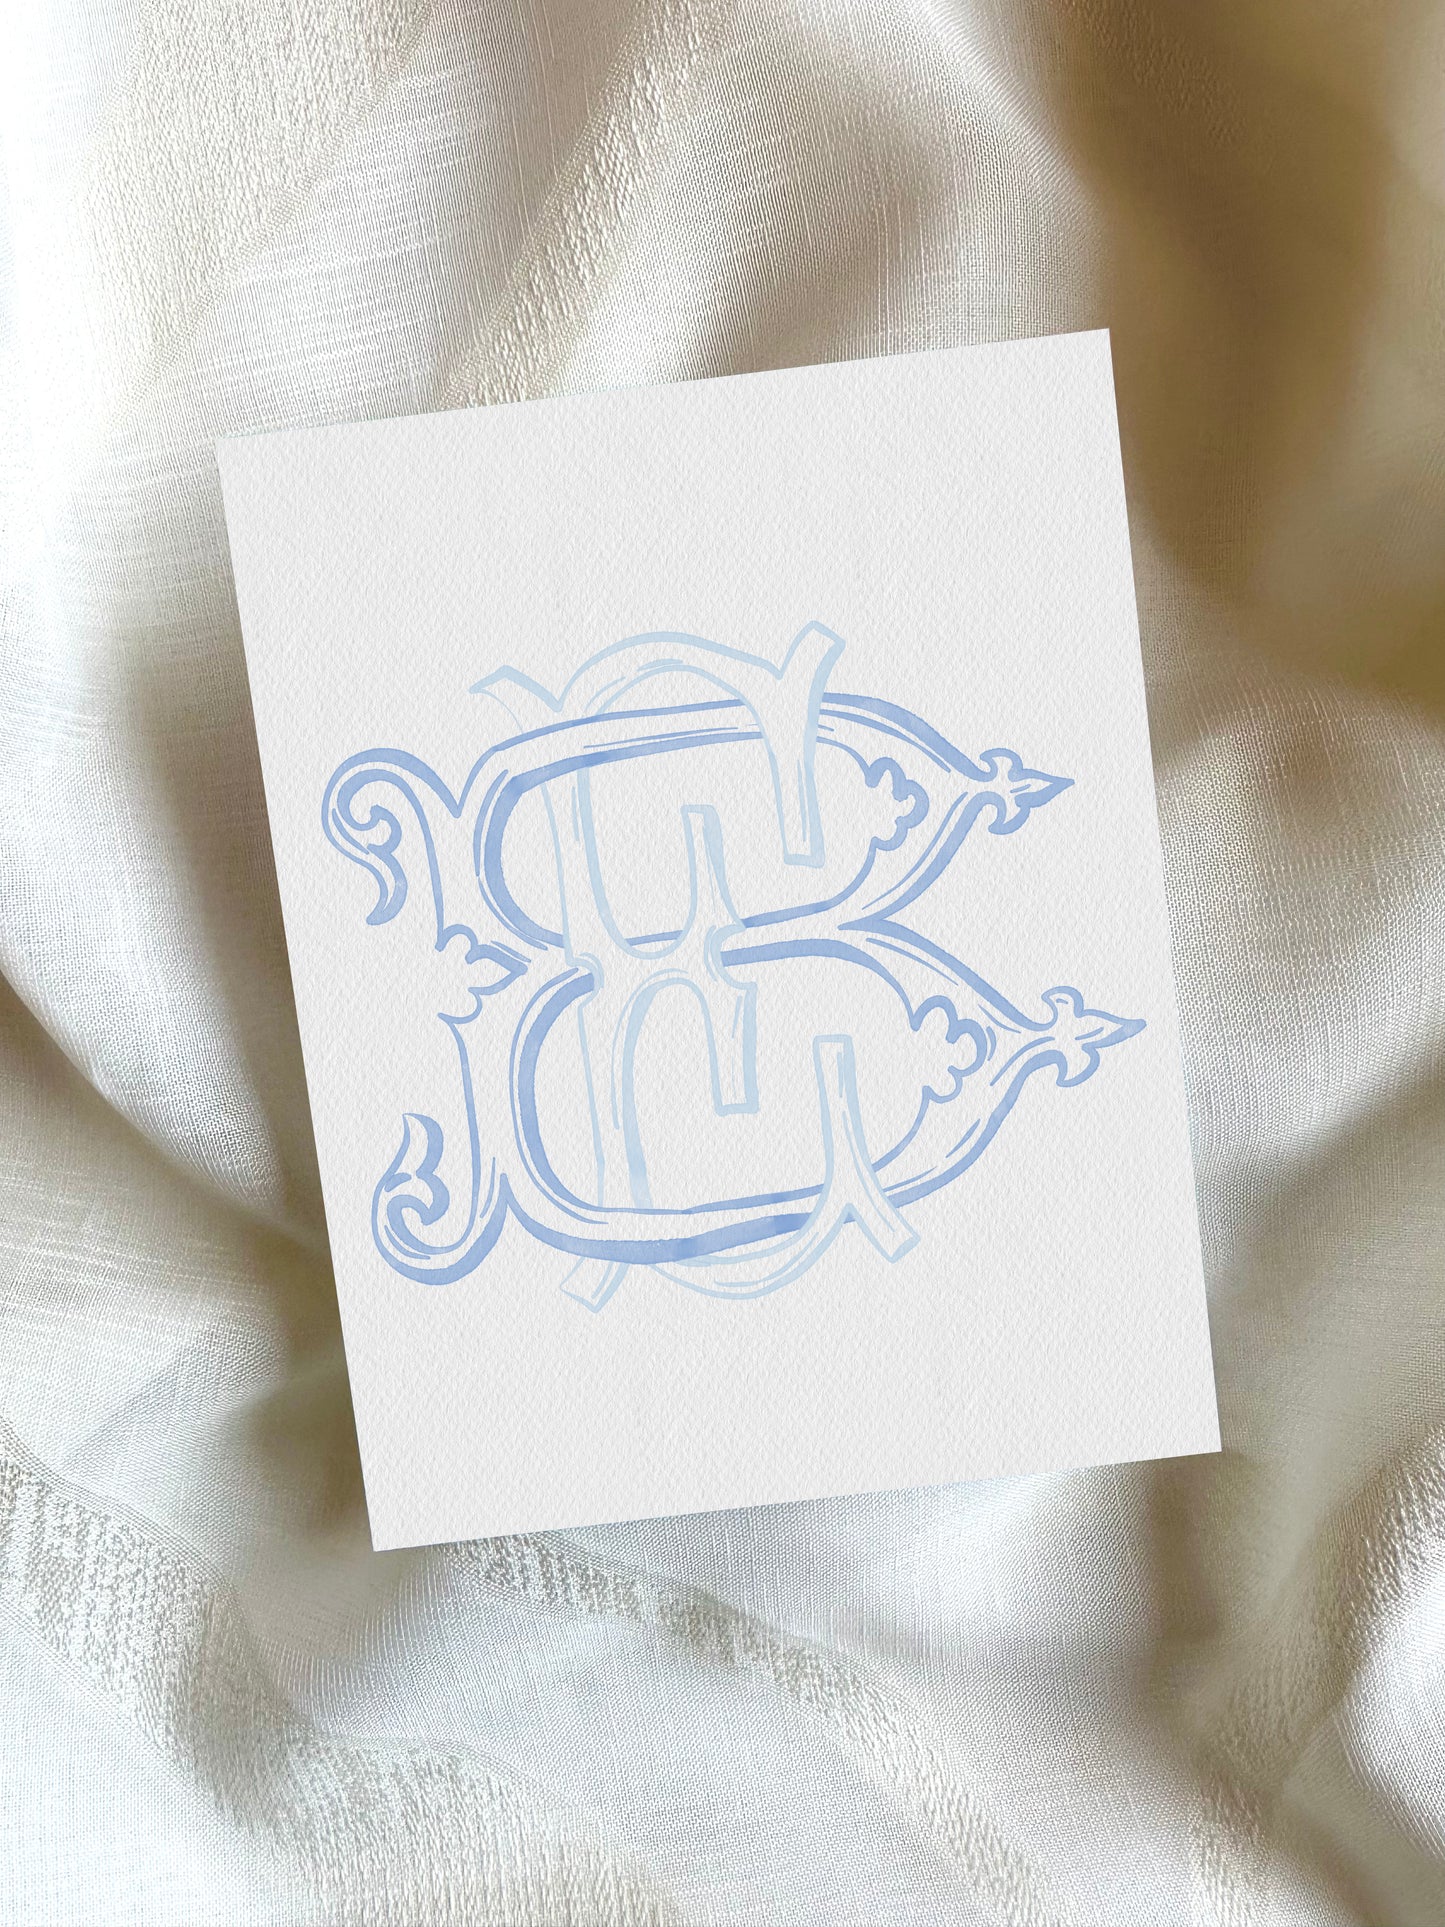 2 Letter Monogram with Letters BE EB | Digital Download - Wedding Monogram SVG, Personal Logo, Wedding Logo for Wedding Invitations The Wedding Crest Lab